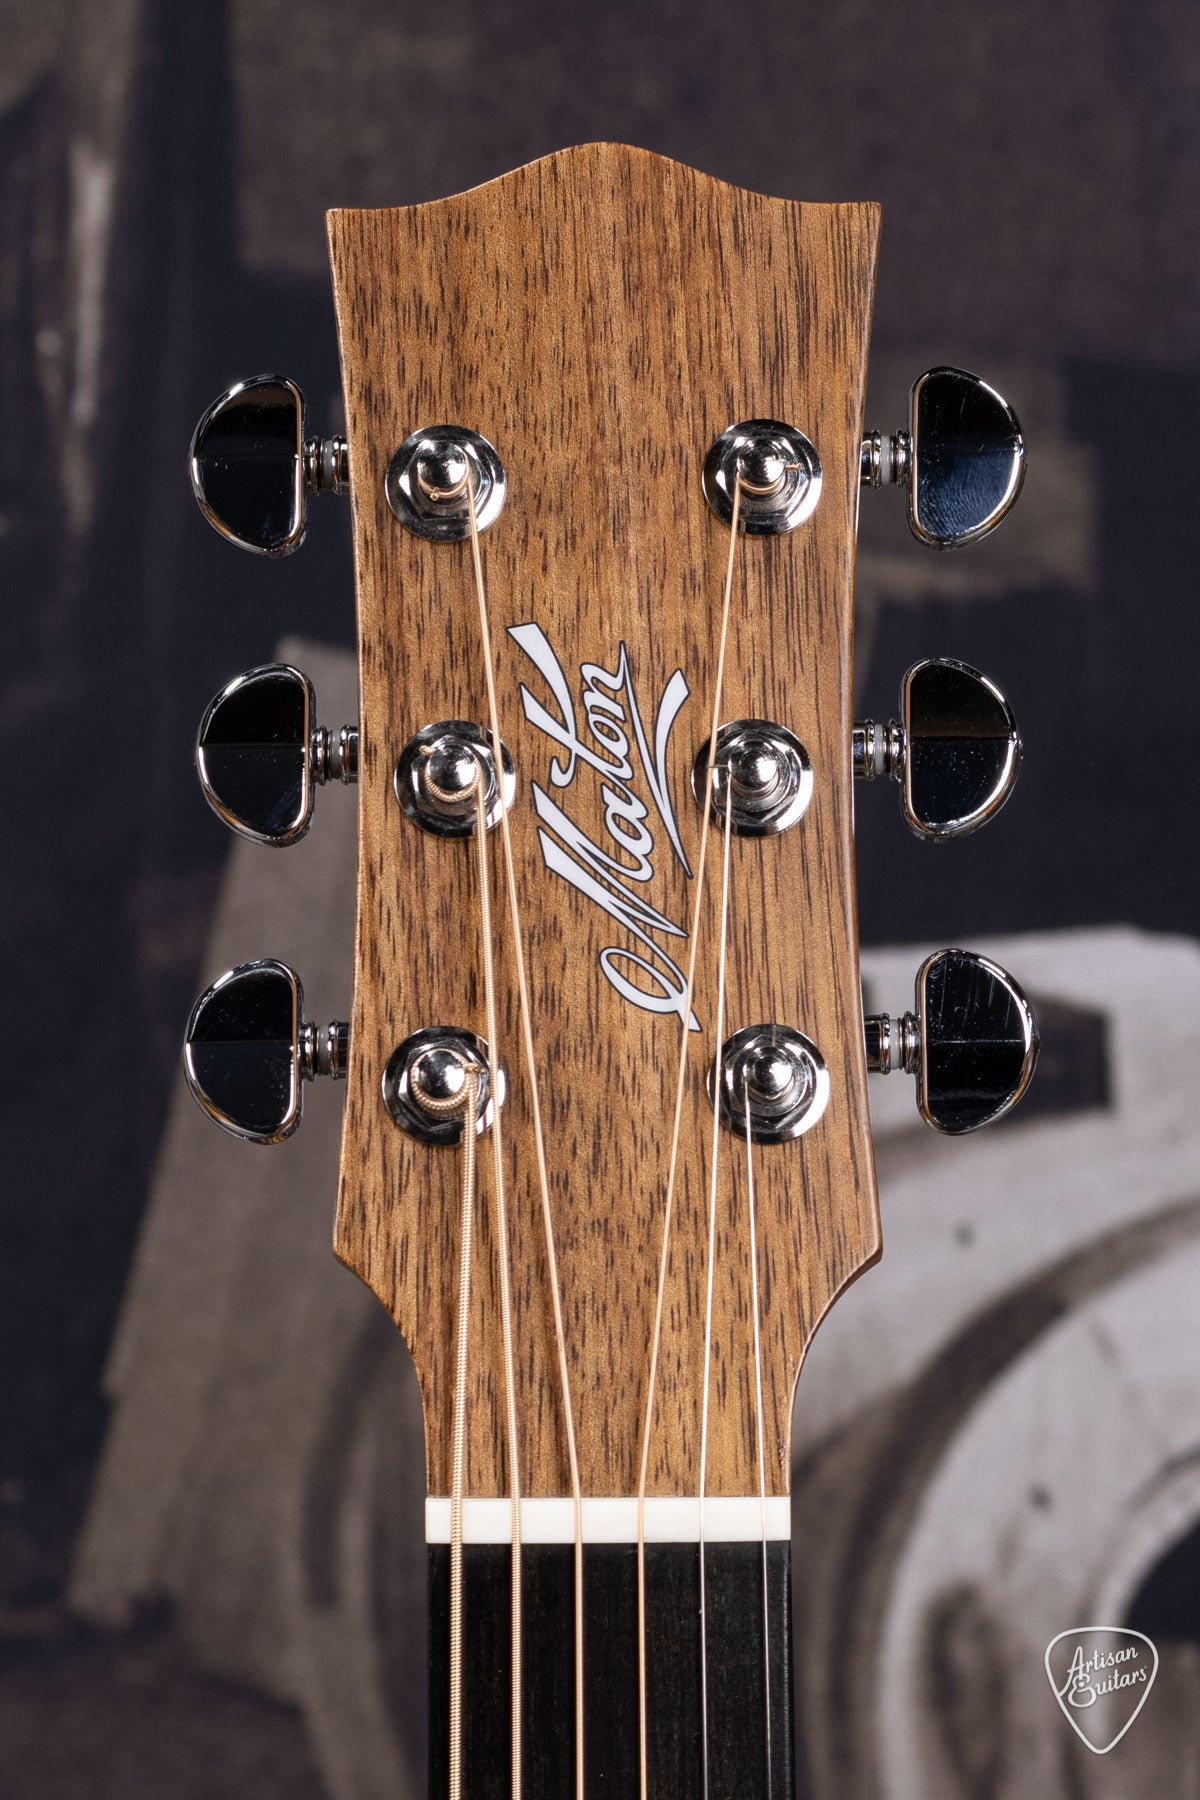 Maton Guitars Solid Road Series SRS-808C - 16210